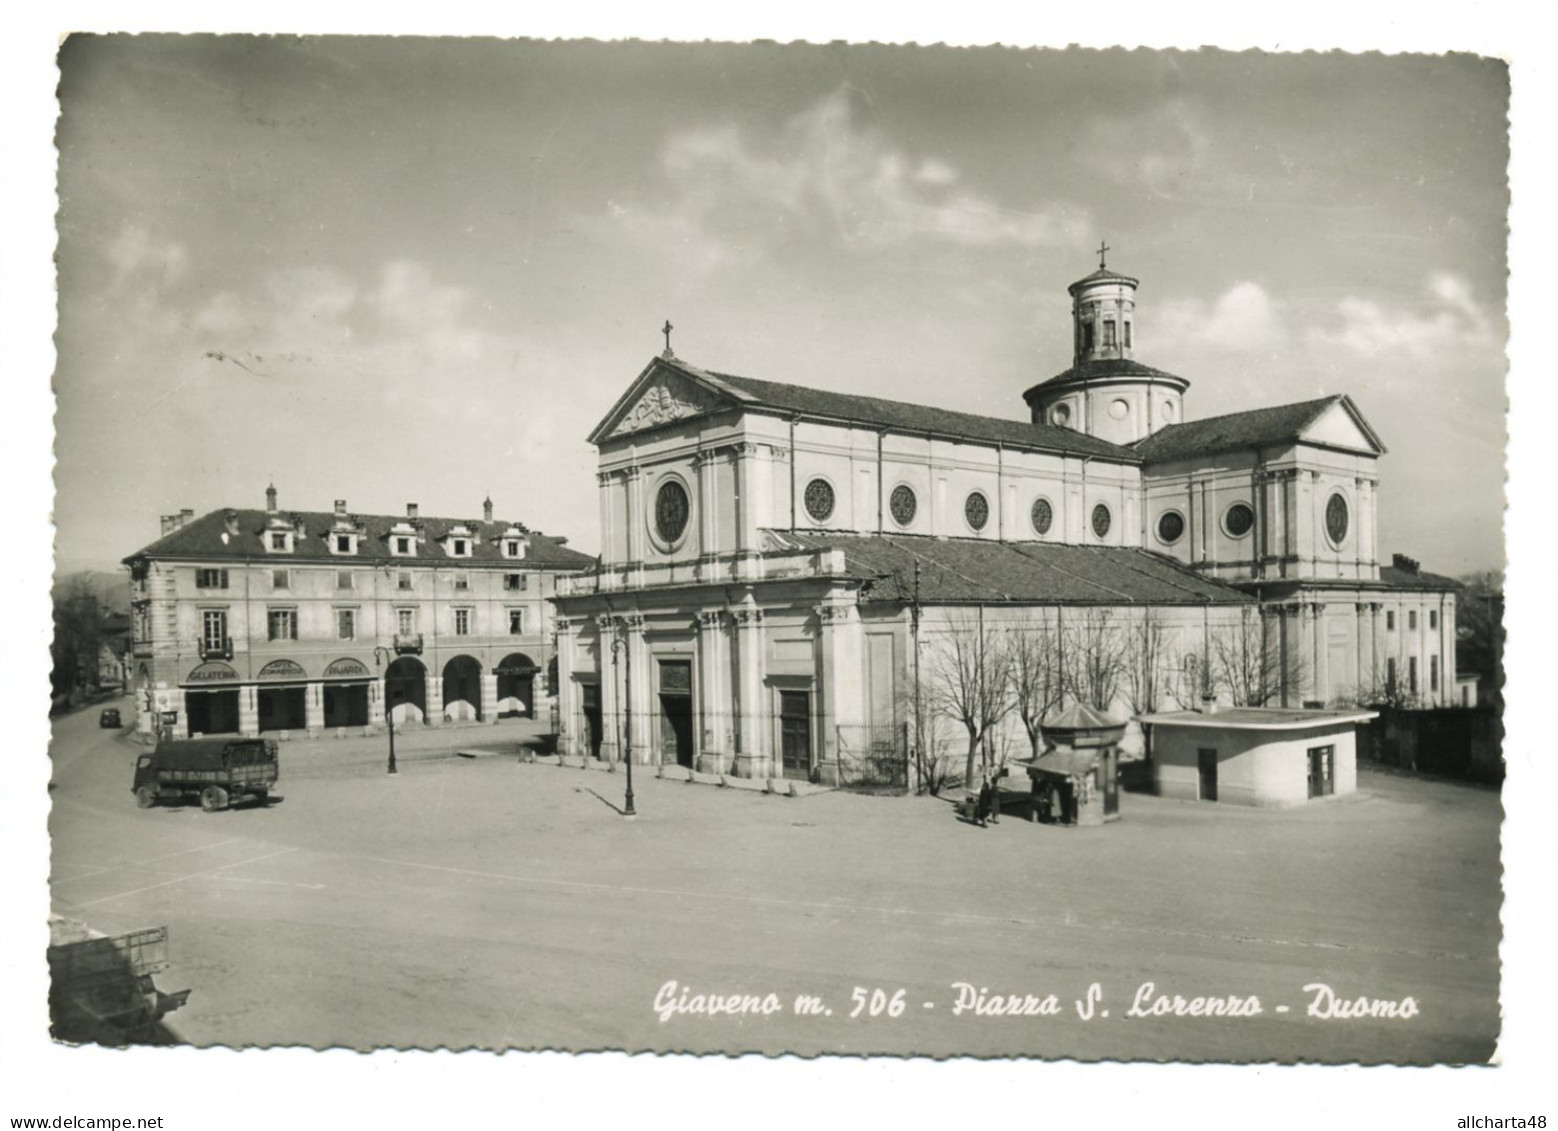 D2191] GIAVENO Torino PIAZZA SAN LORENZO - DUOMO Camion Viaggiata 1958 - Panoramic Views